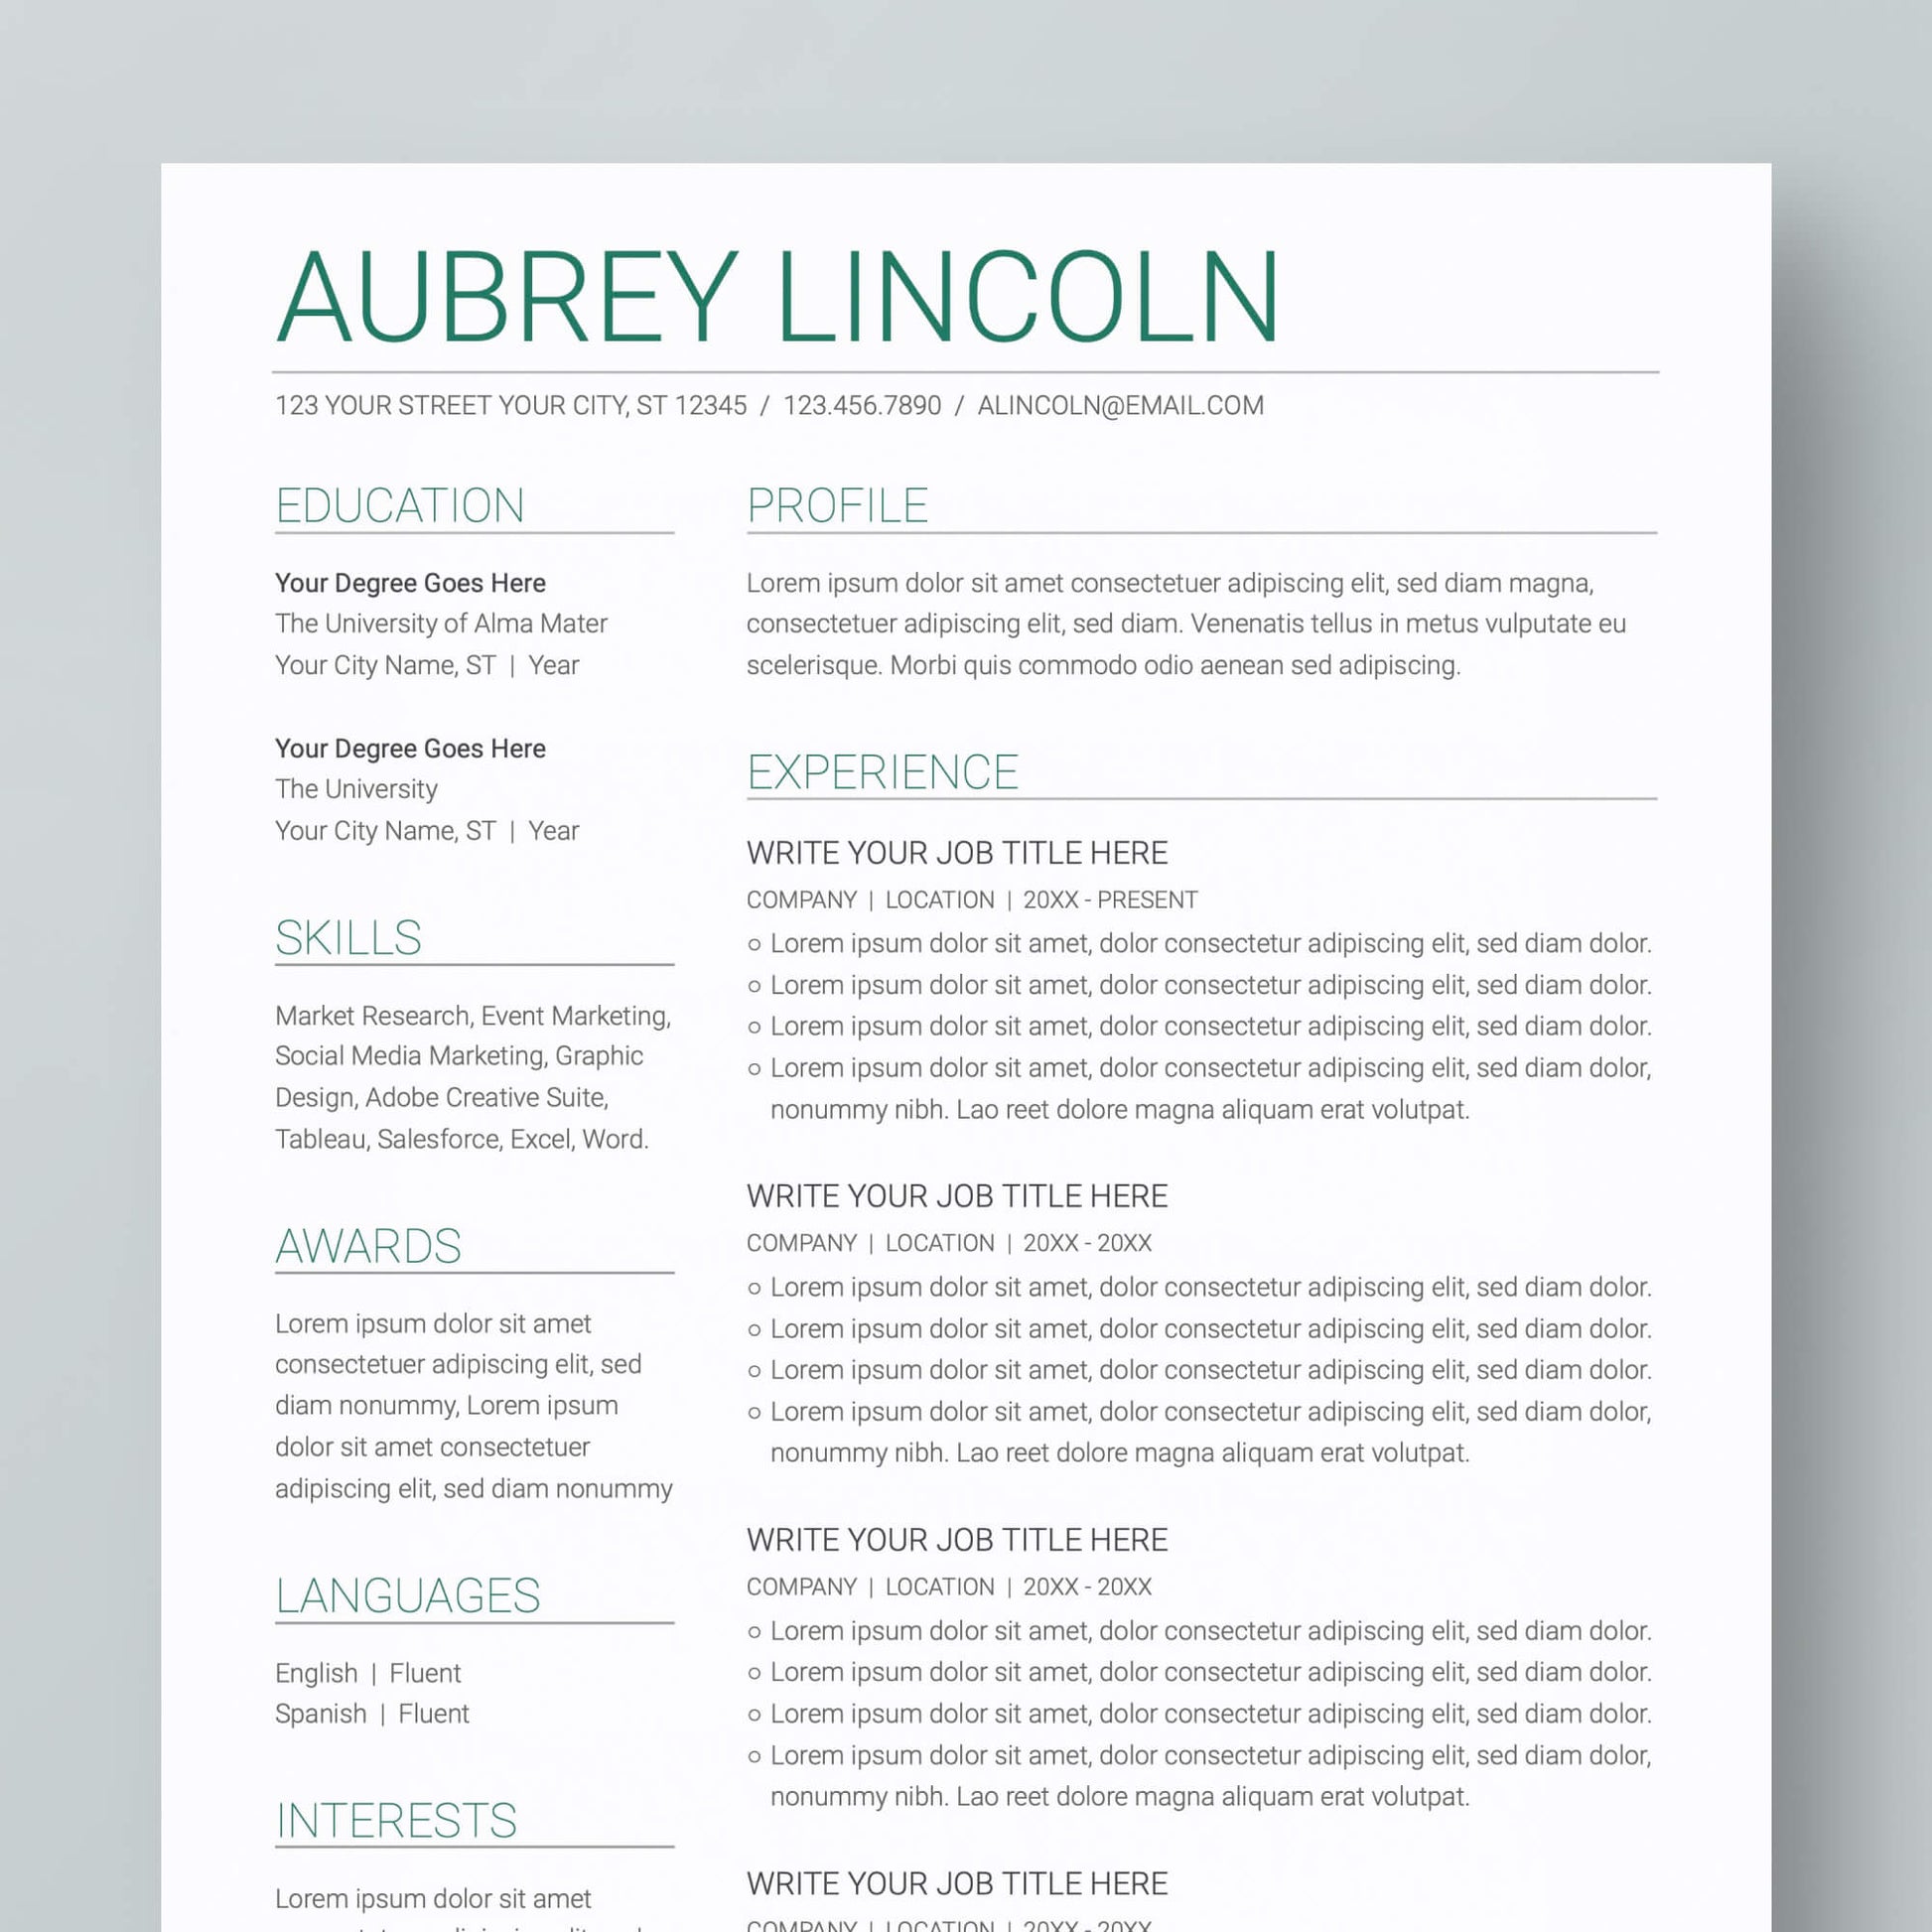 Resume Template: Aubrey Lincoln - MioDocs